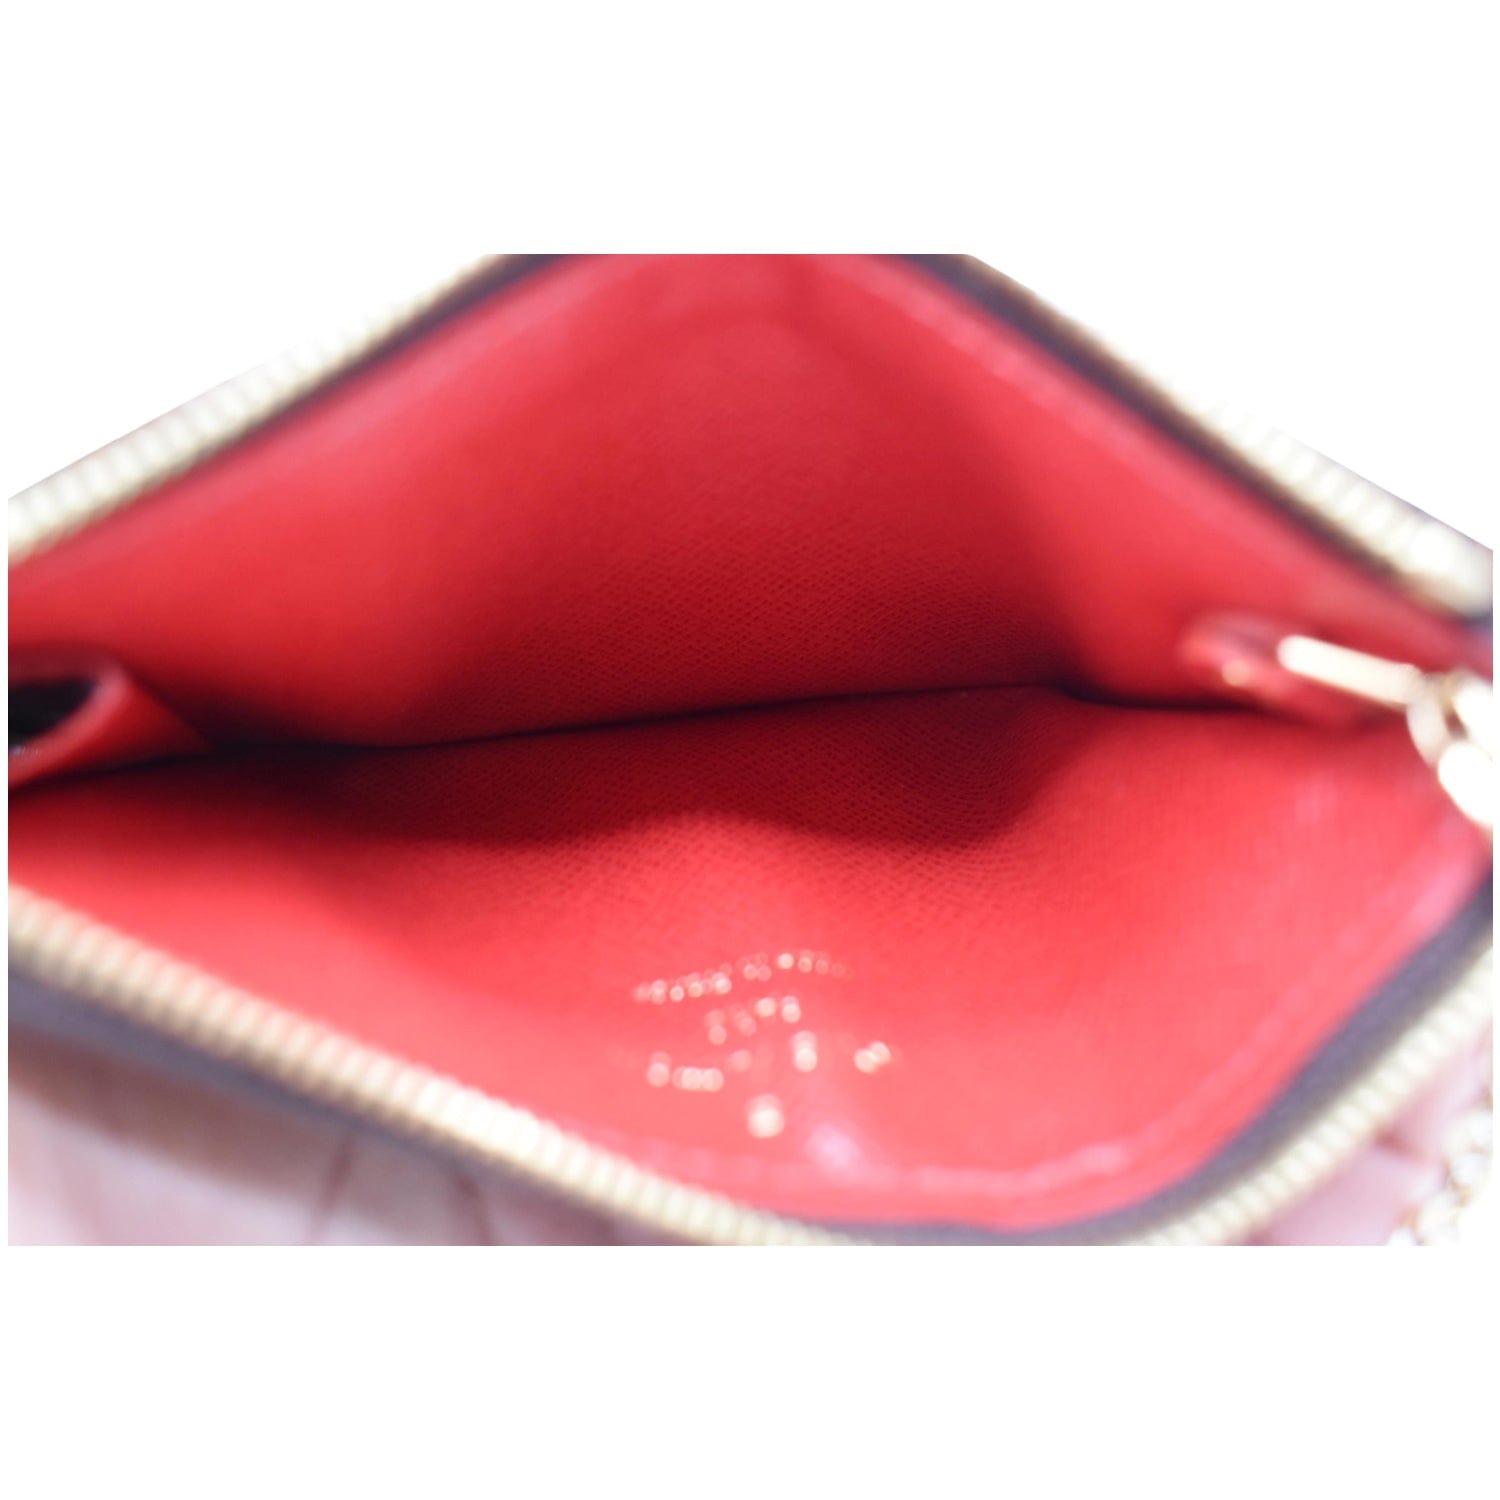 Card Holder Recto Verso Damier Ebene - Women - Small Leather Goods